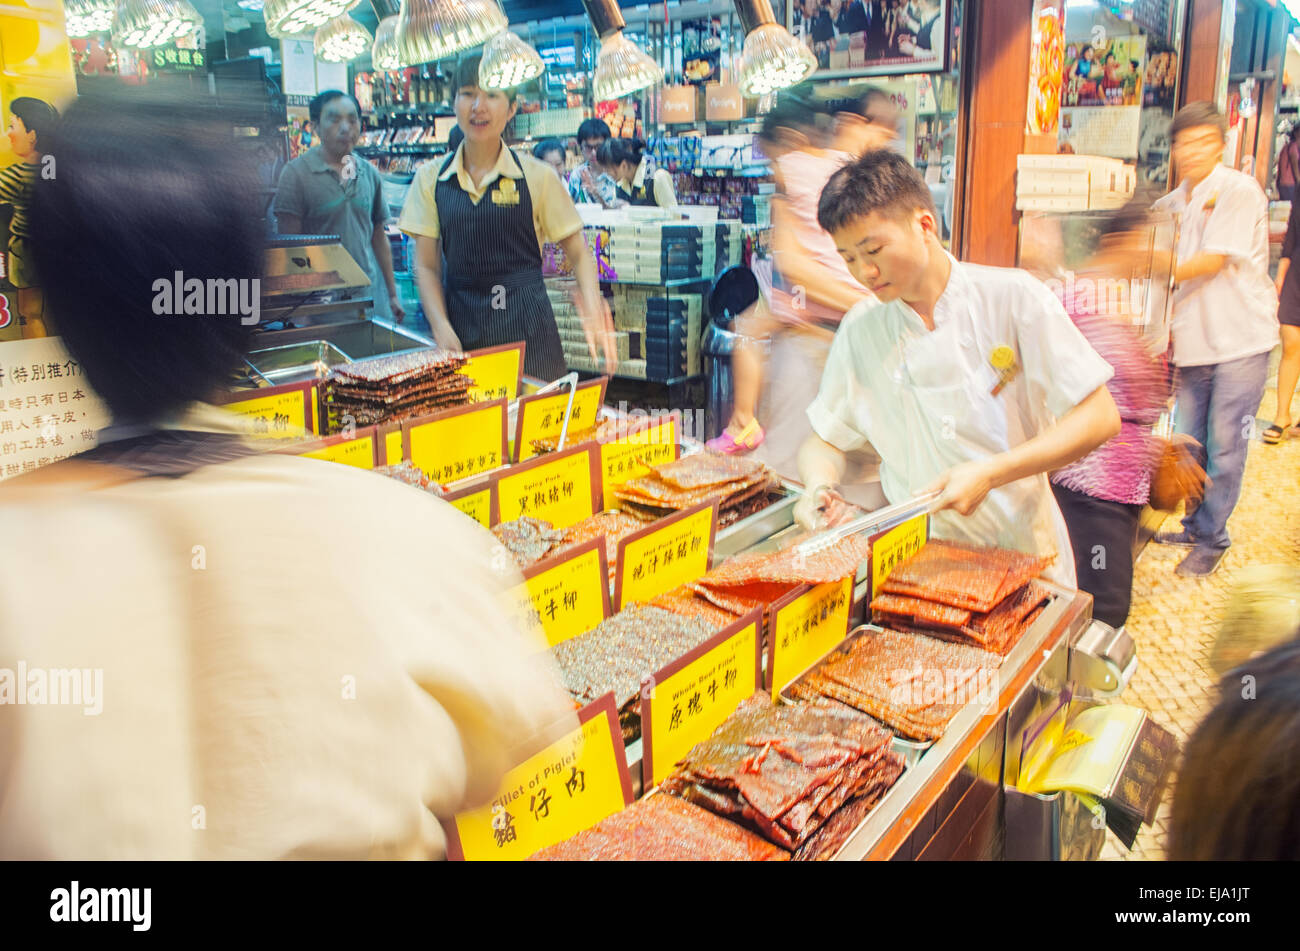 Beef or pork meat Jerky delicacies in Macau Stock Photo